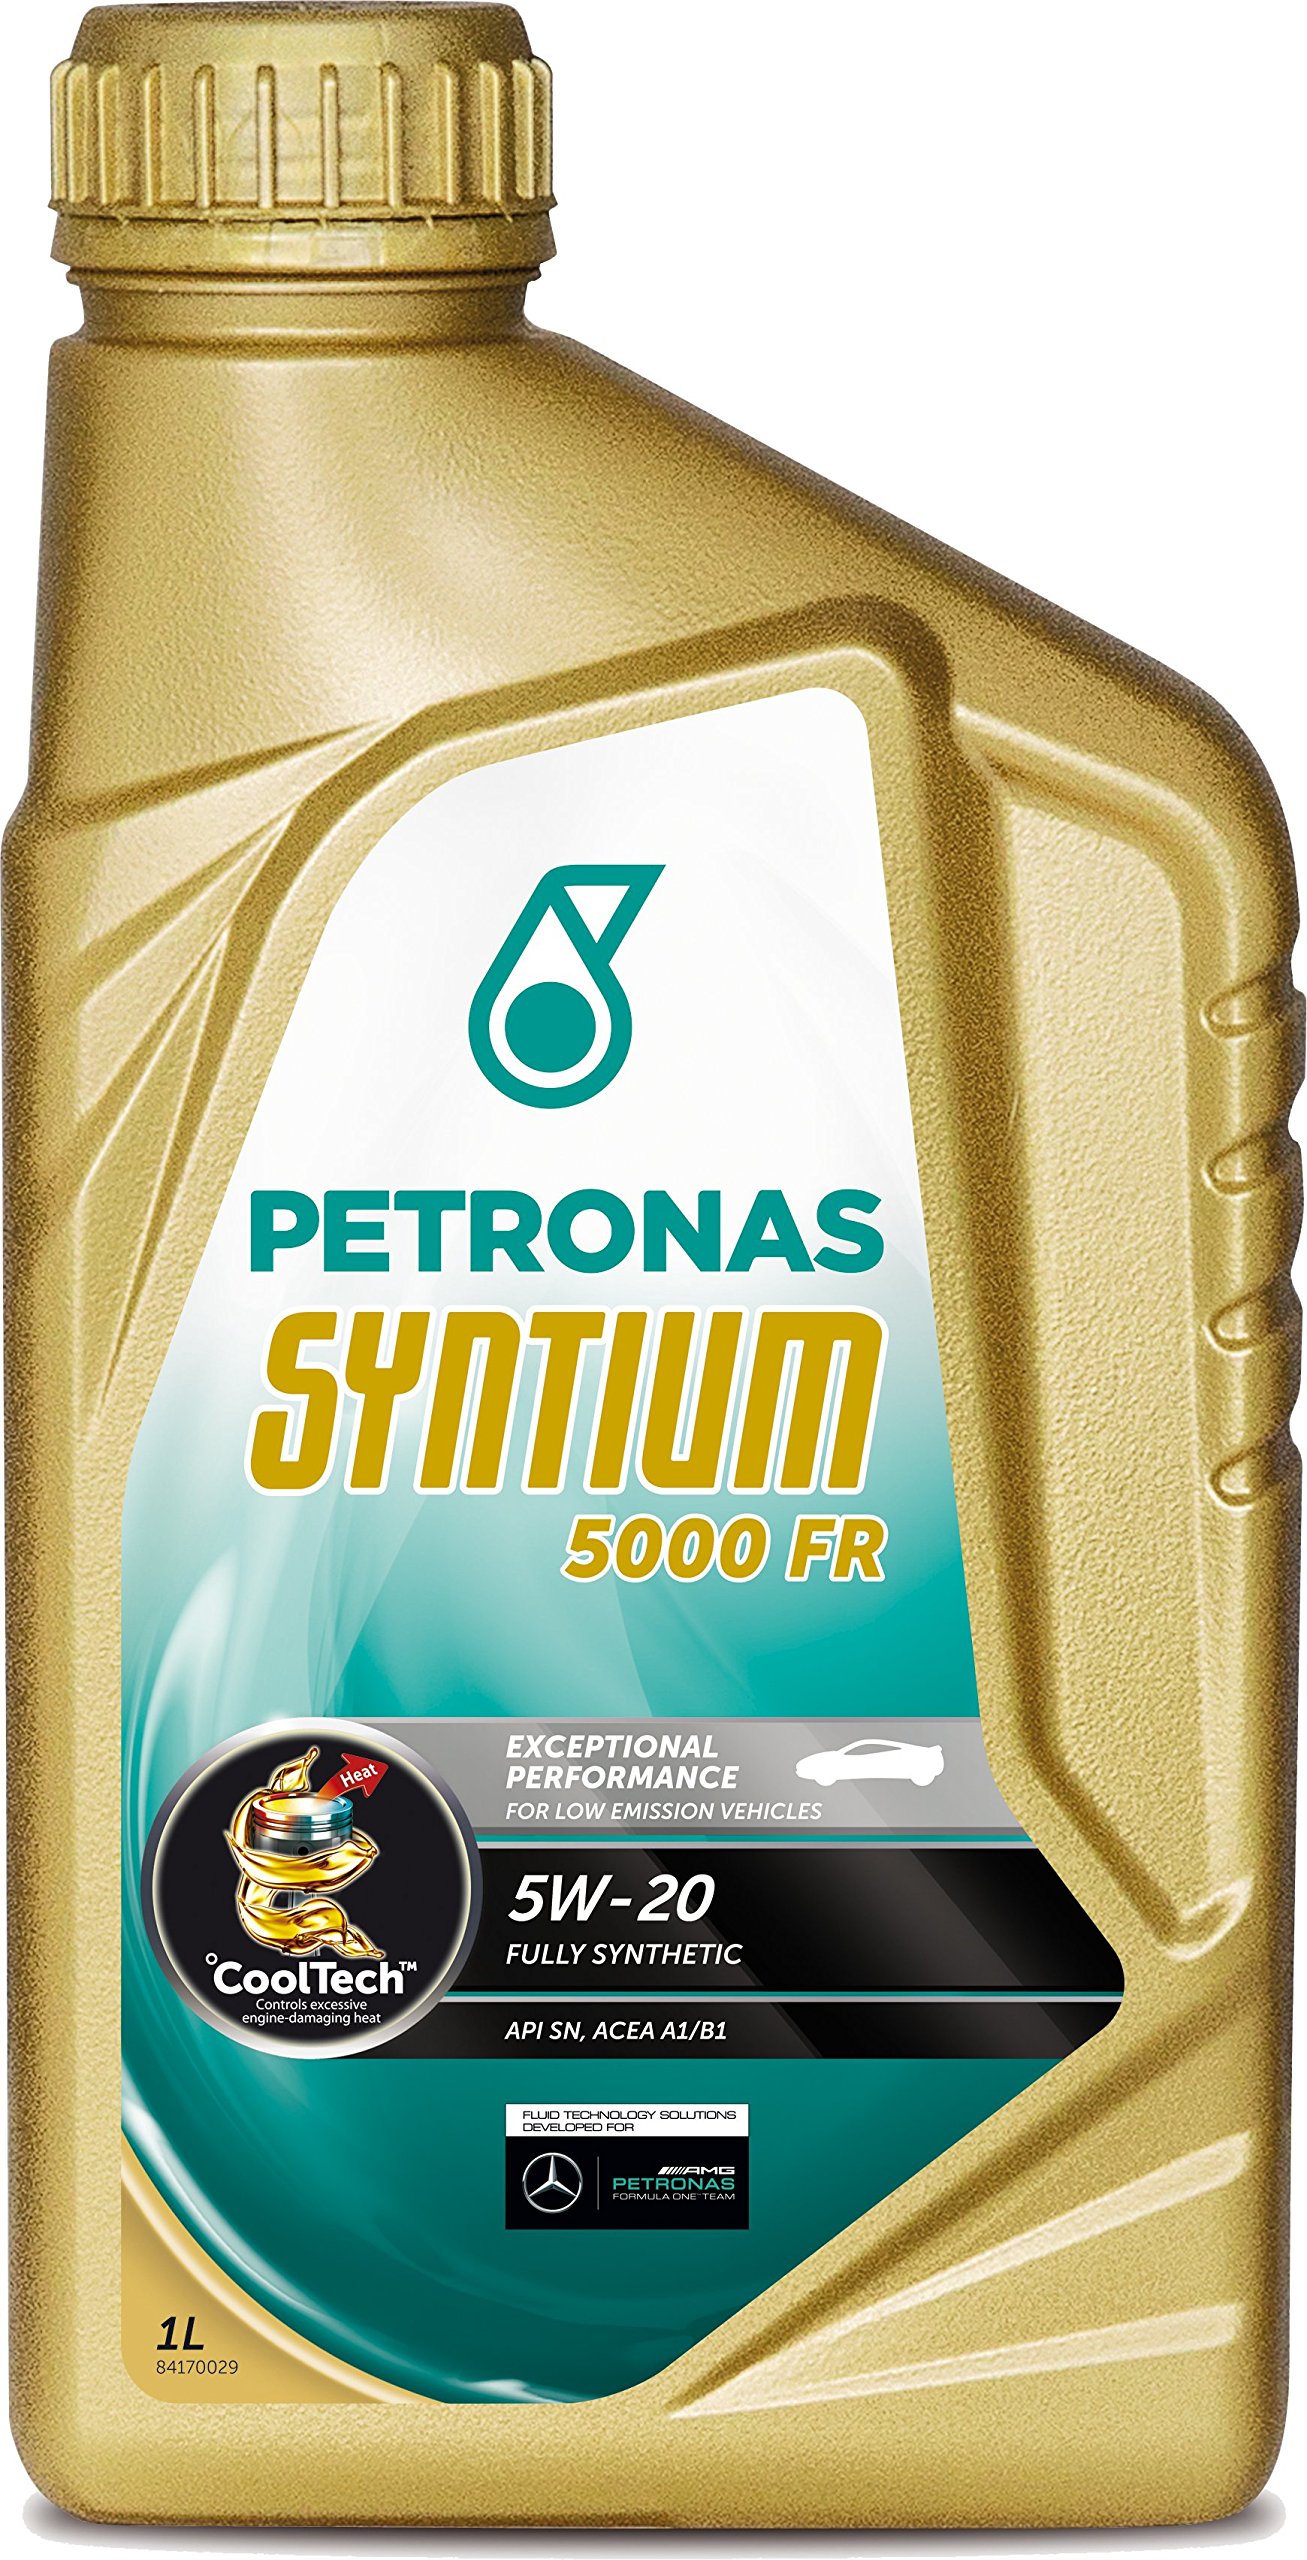 Petronas Öl SYNTIUM 5000 FR 5W-20, 1 Liter von Petronas